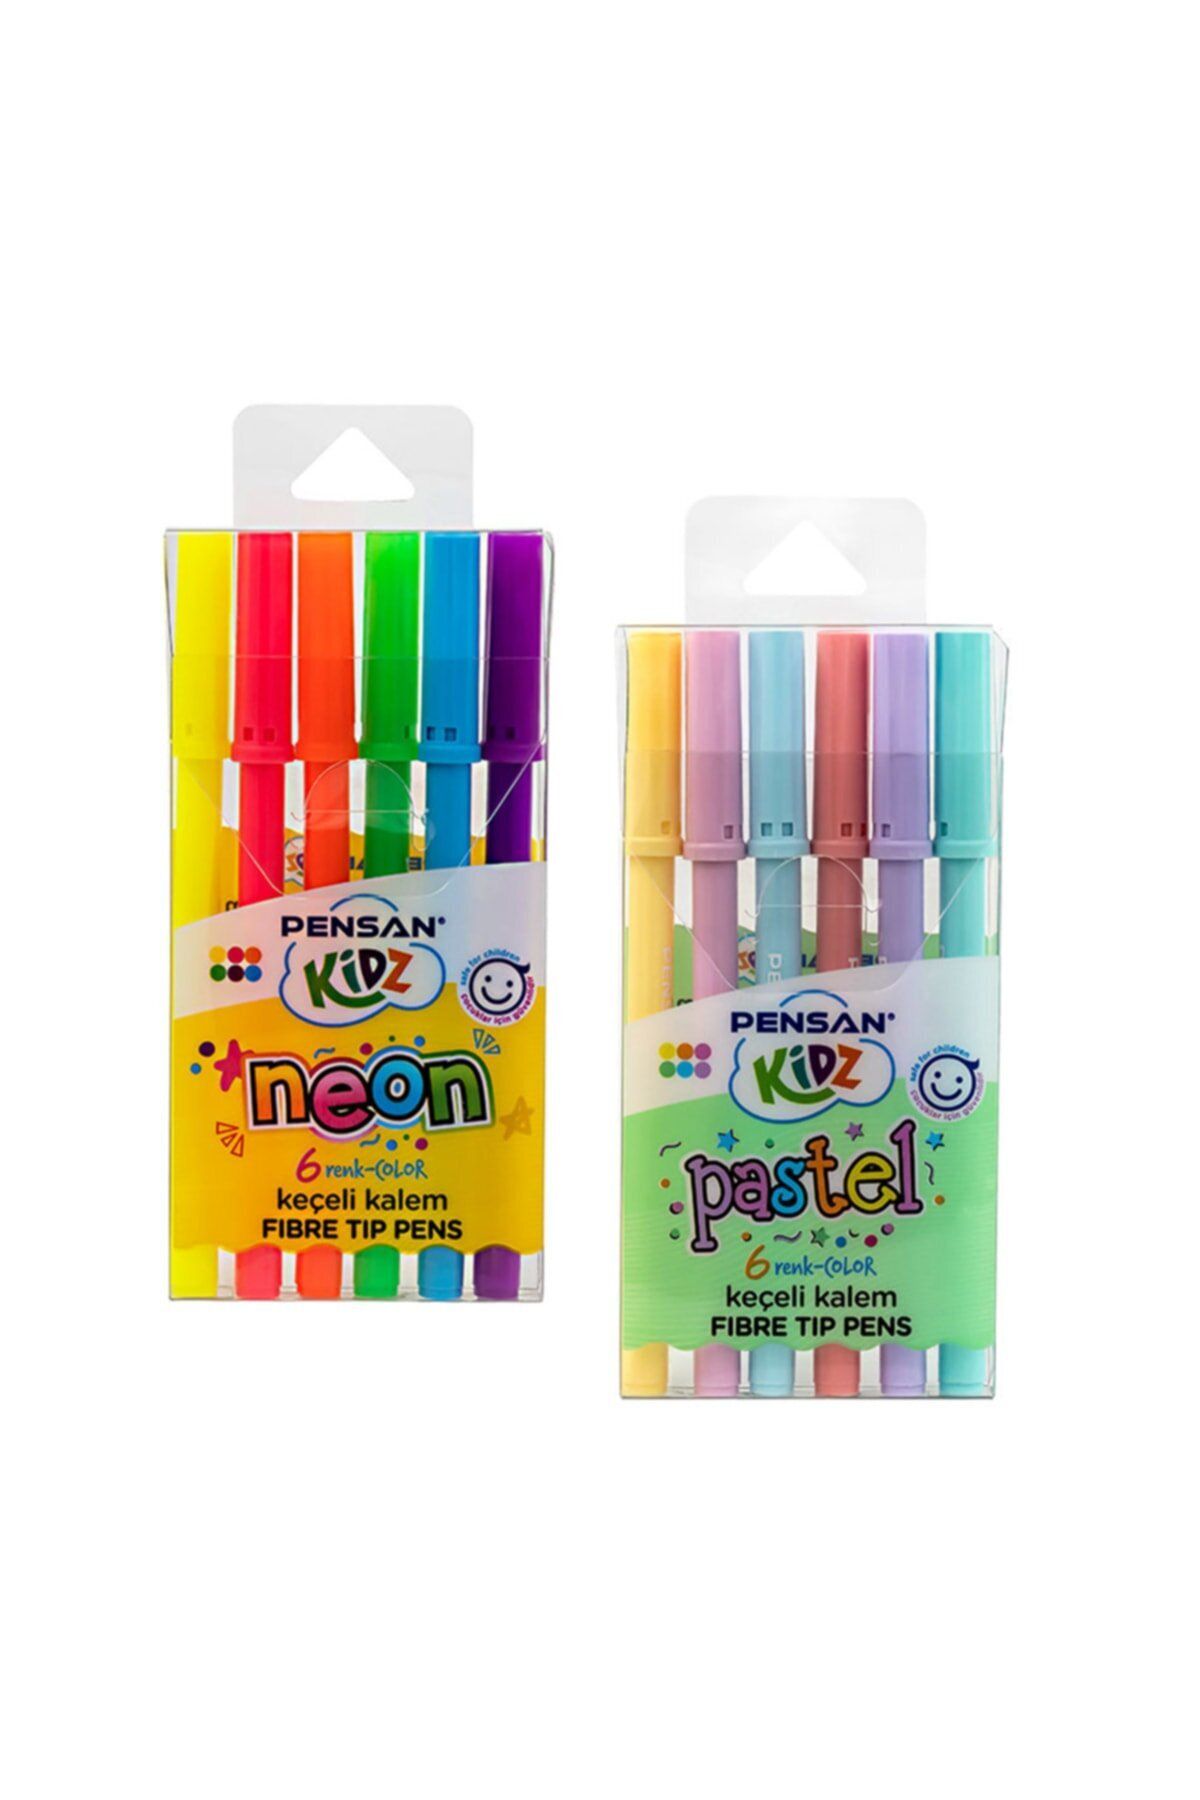 Pensan Kidz Keçeli Kalem 12 Renk Set - 6 Renk Neon 6 Renk Pastel